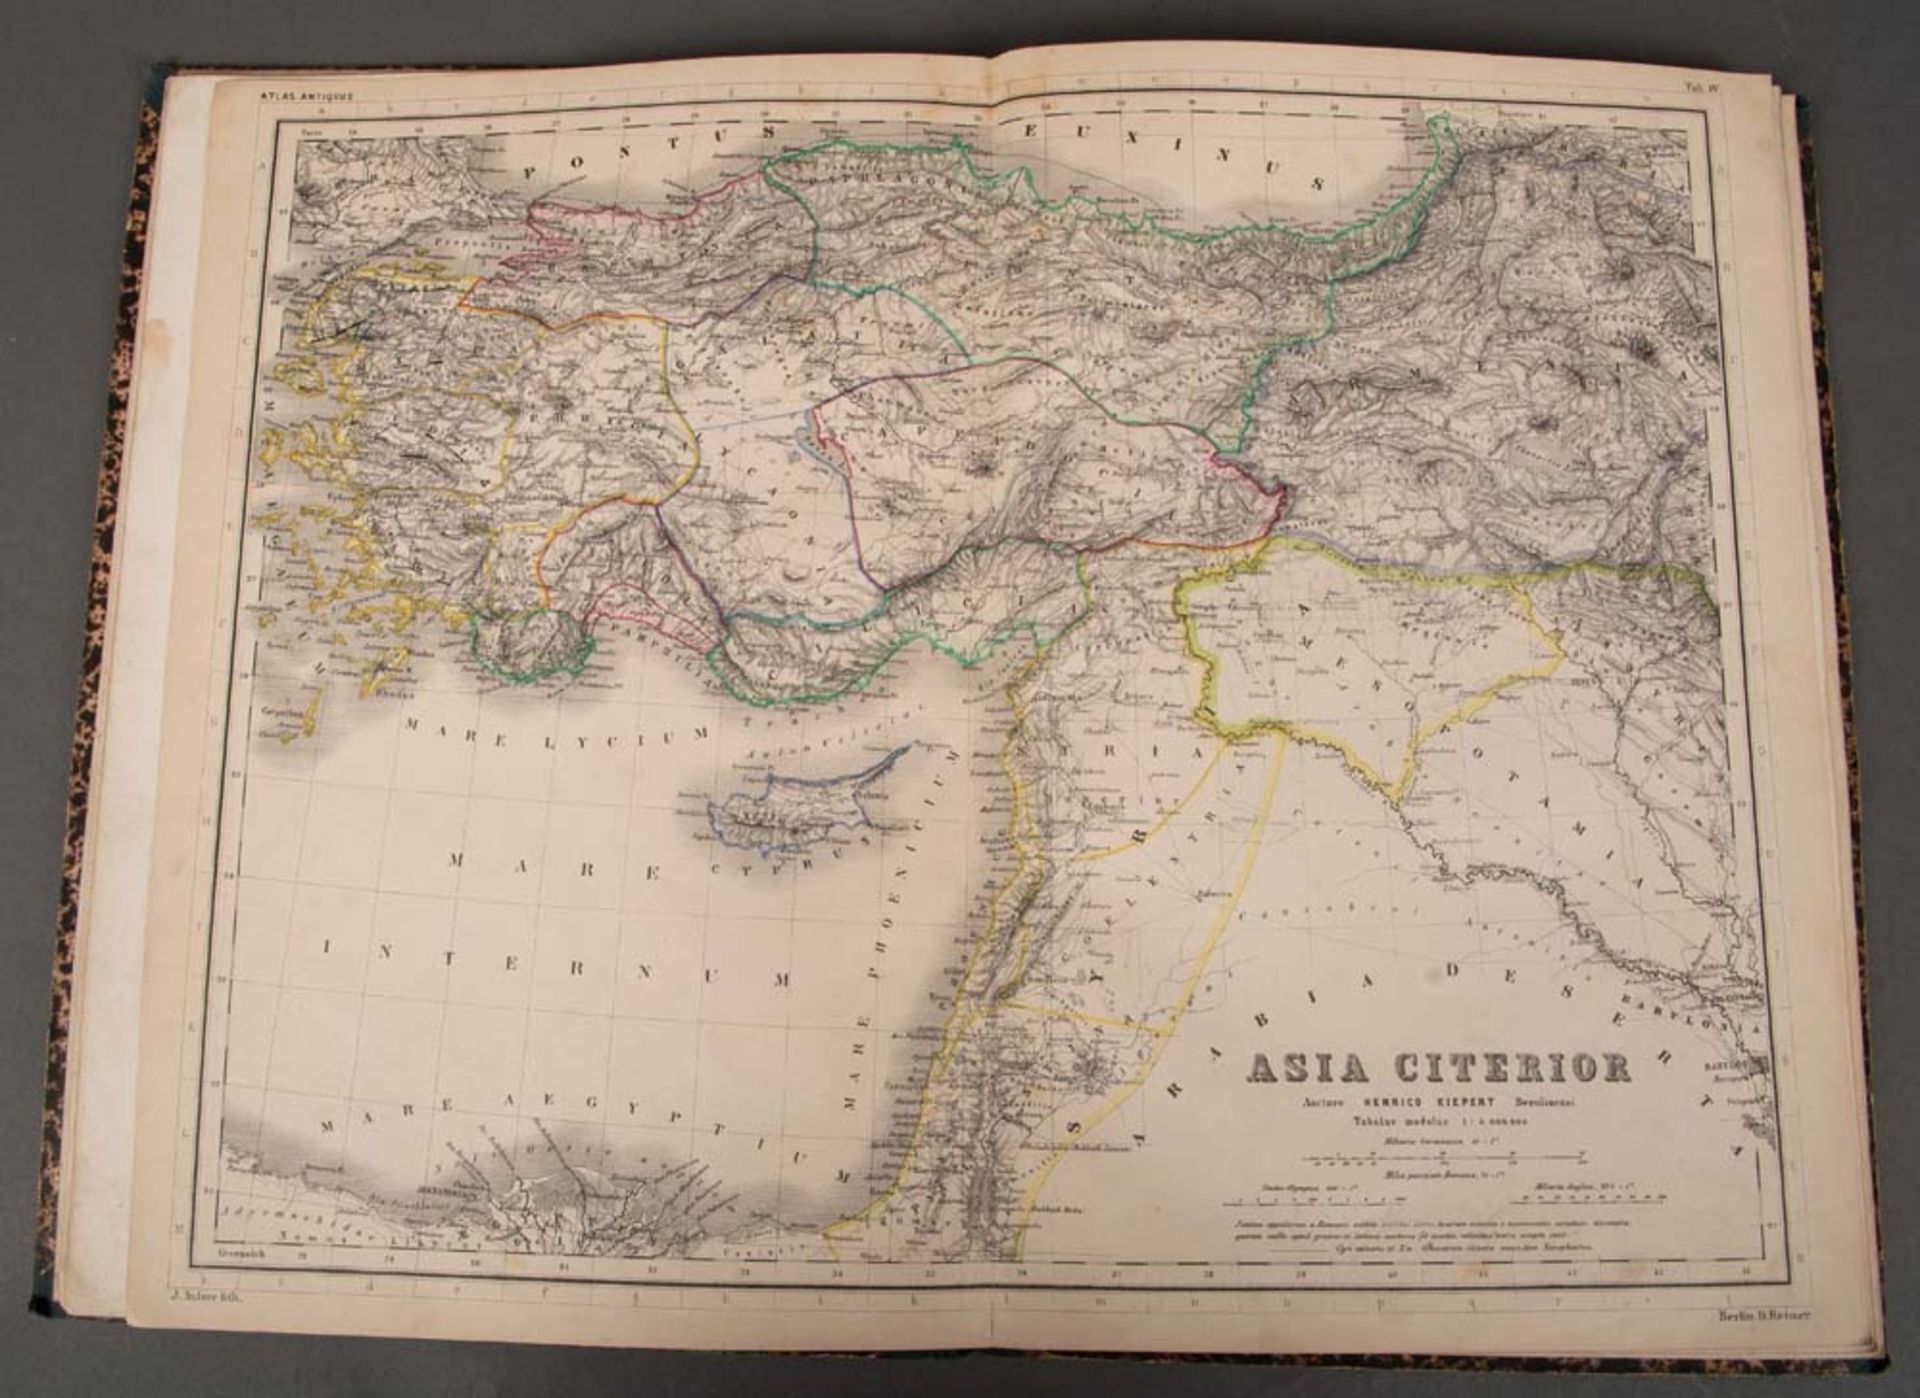 Heinrich Kiepert „Atlas Antiquus - Zwölf Karten zur Alten Geschichte“, Berlin, 1860.